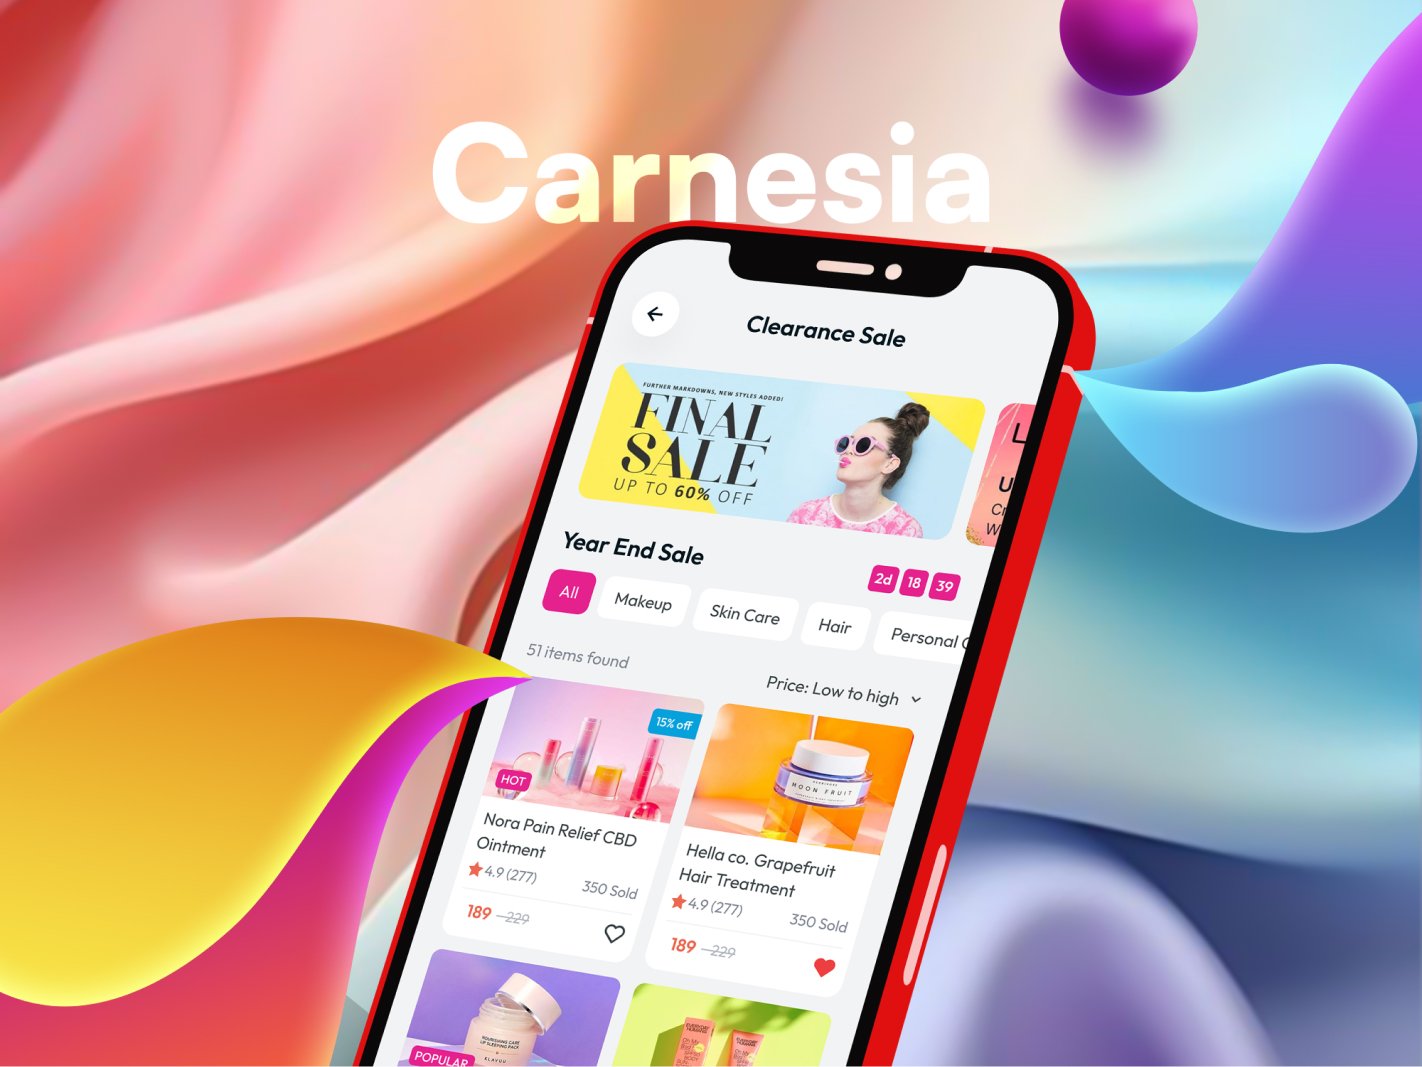 Carnesia- One-stop beauty care retailer